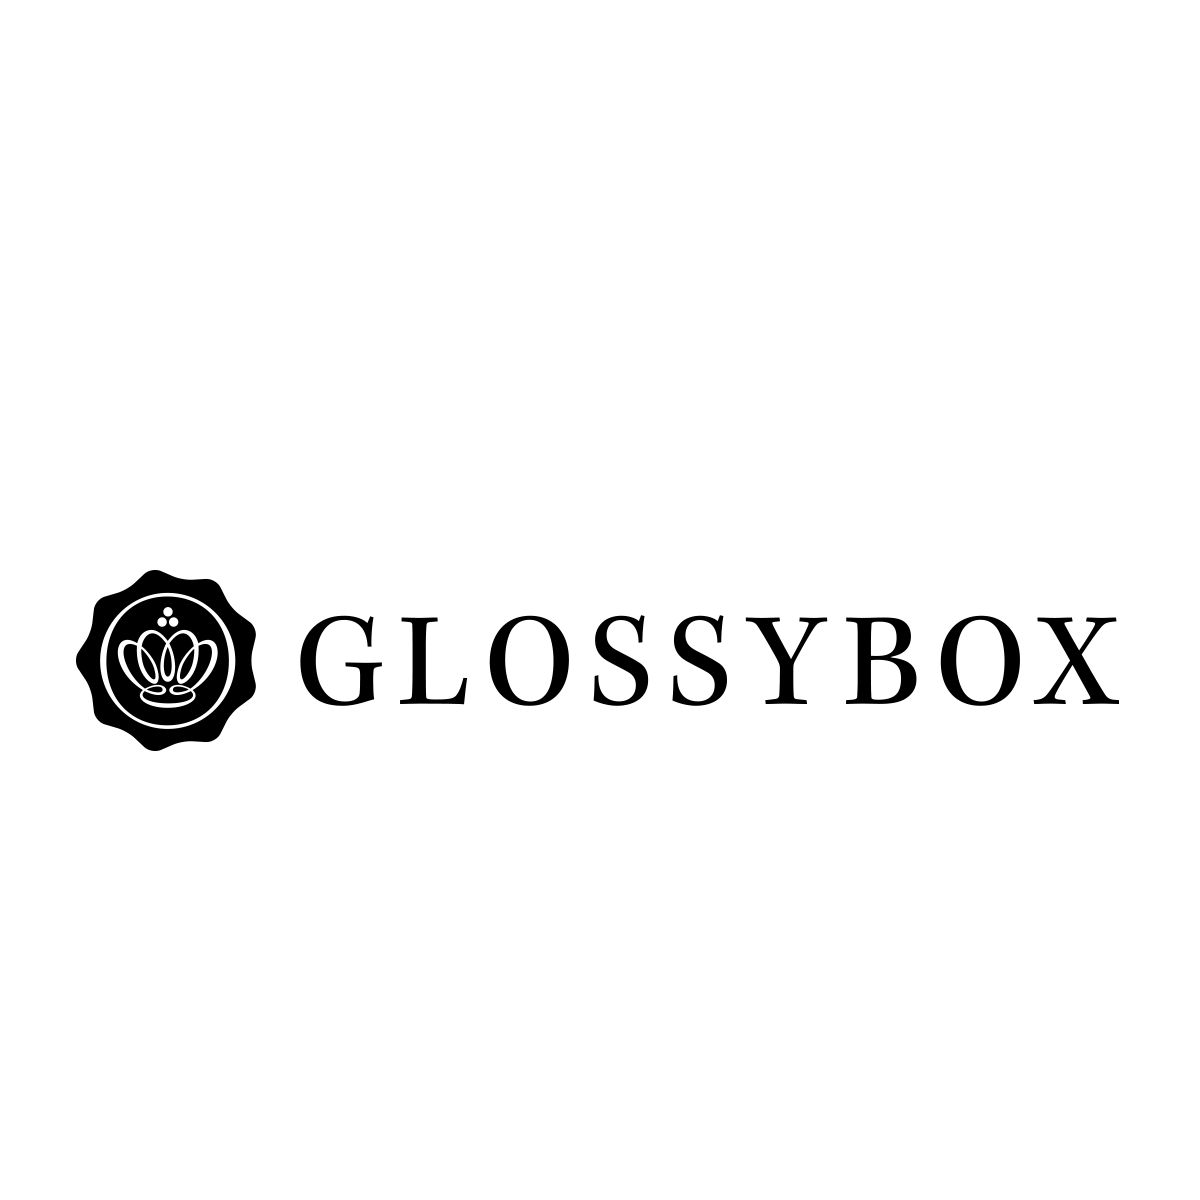 (c) Glossybox.com